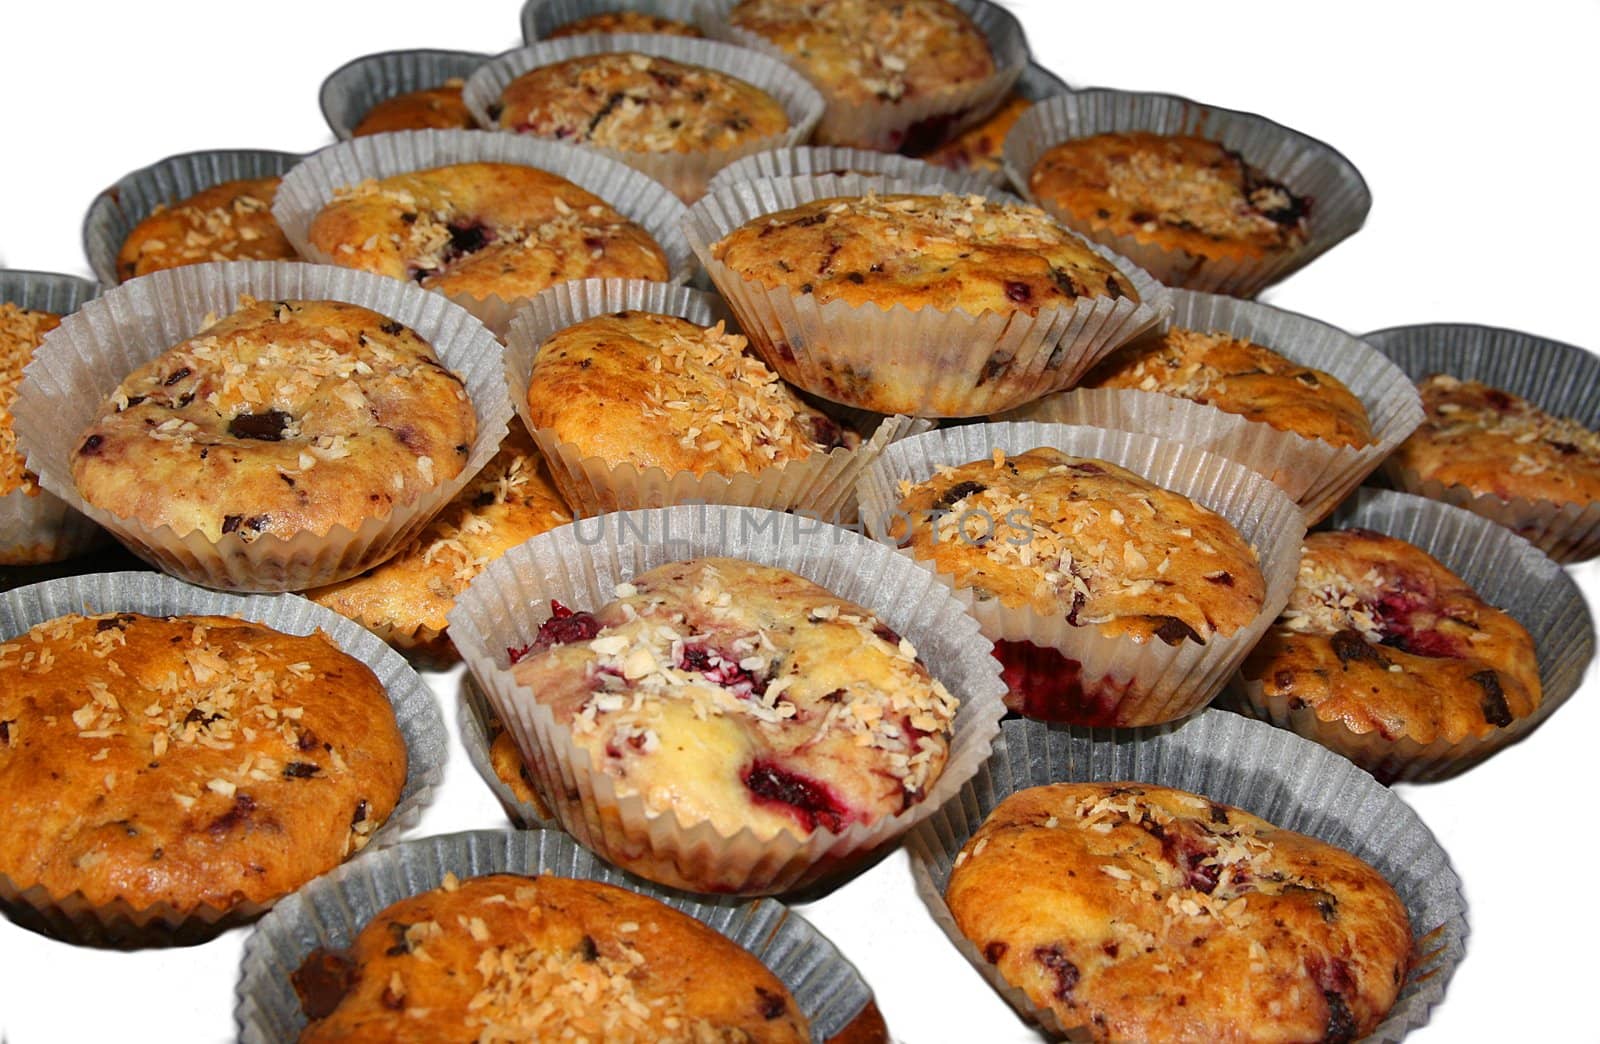 Blueberry muffins isolated on white by sundaune